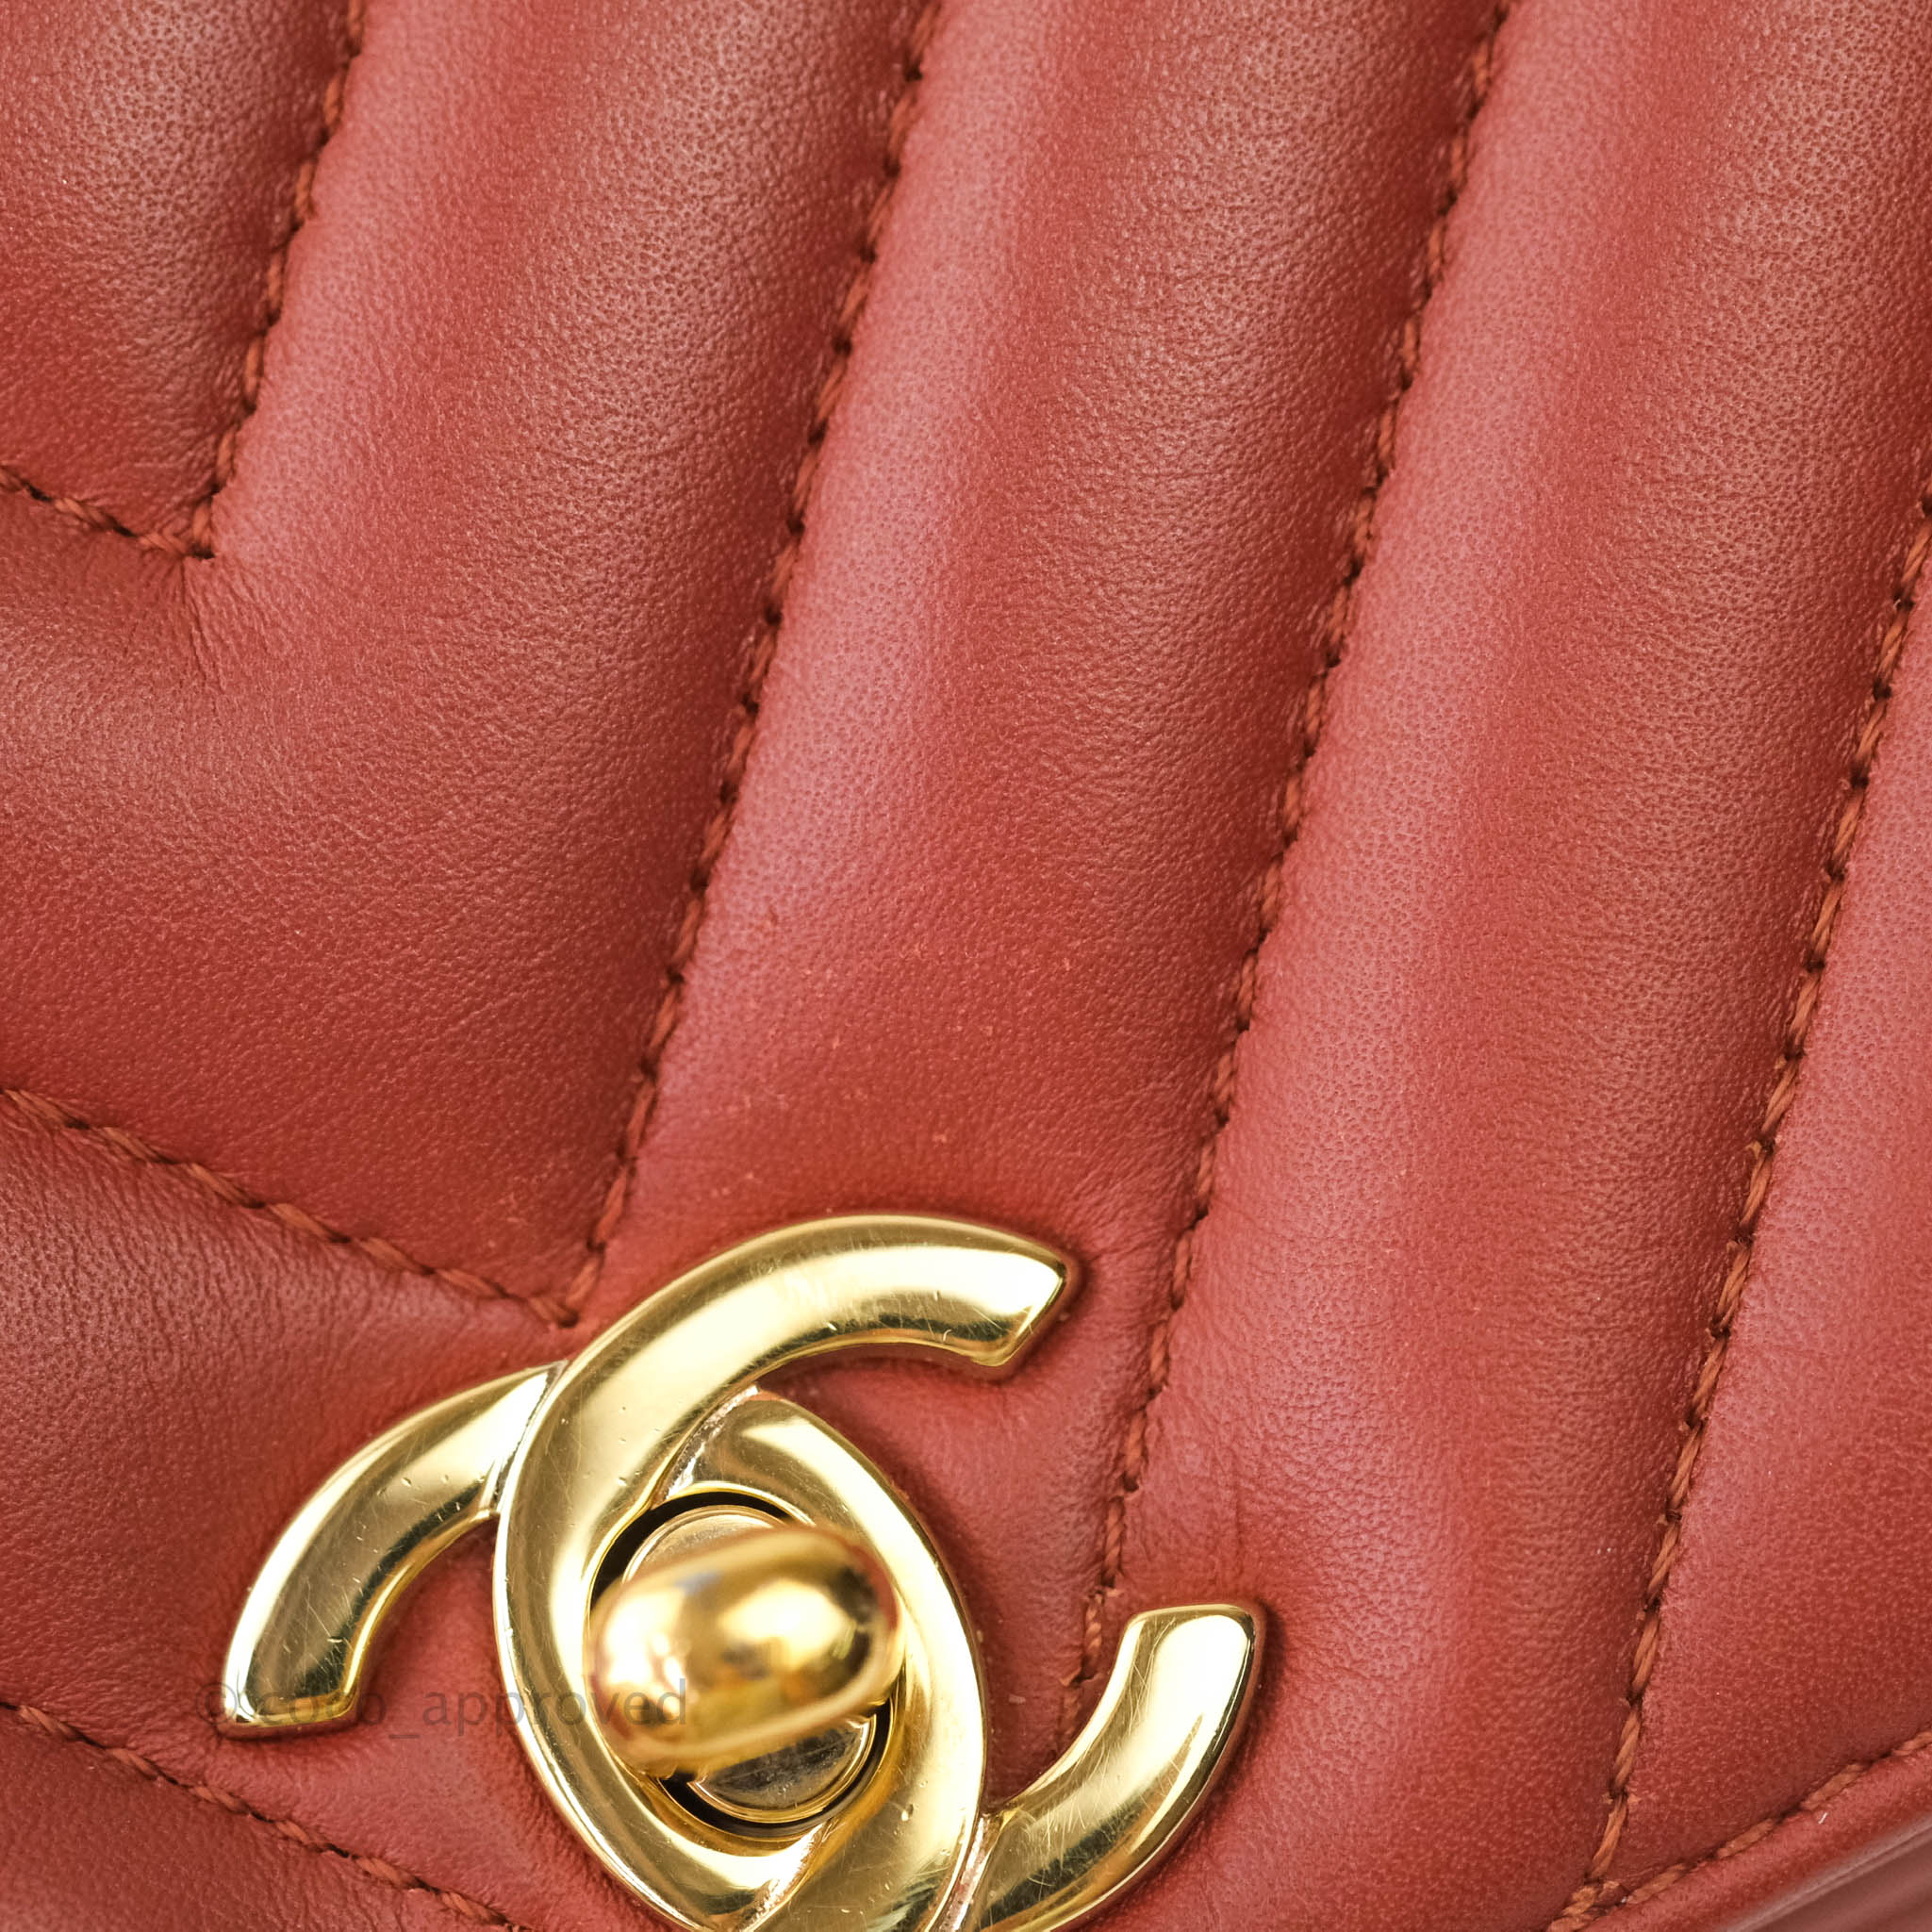 Chanel Chevron Statement Bag - 2 For Sale on 1stDibs